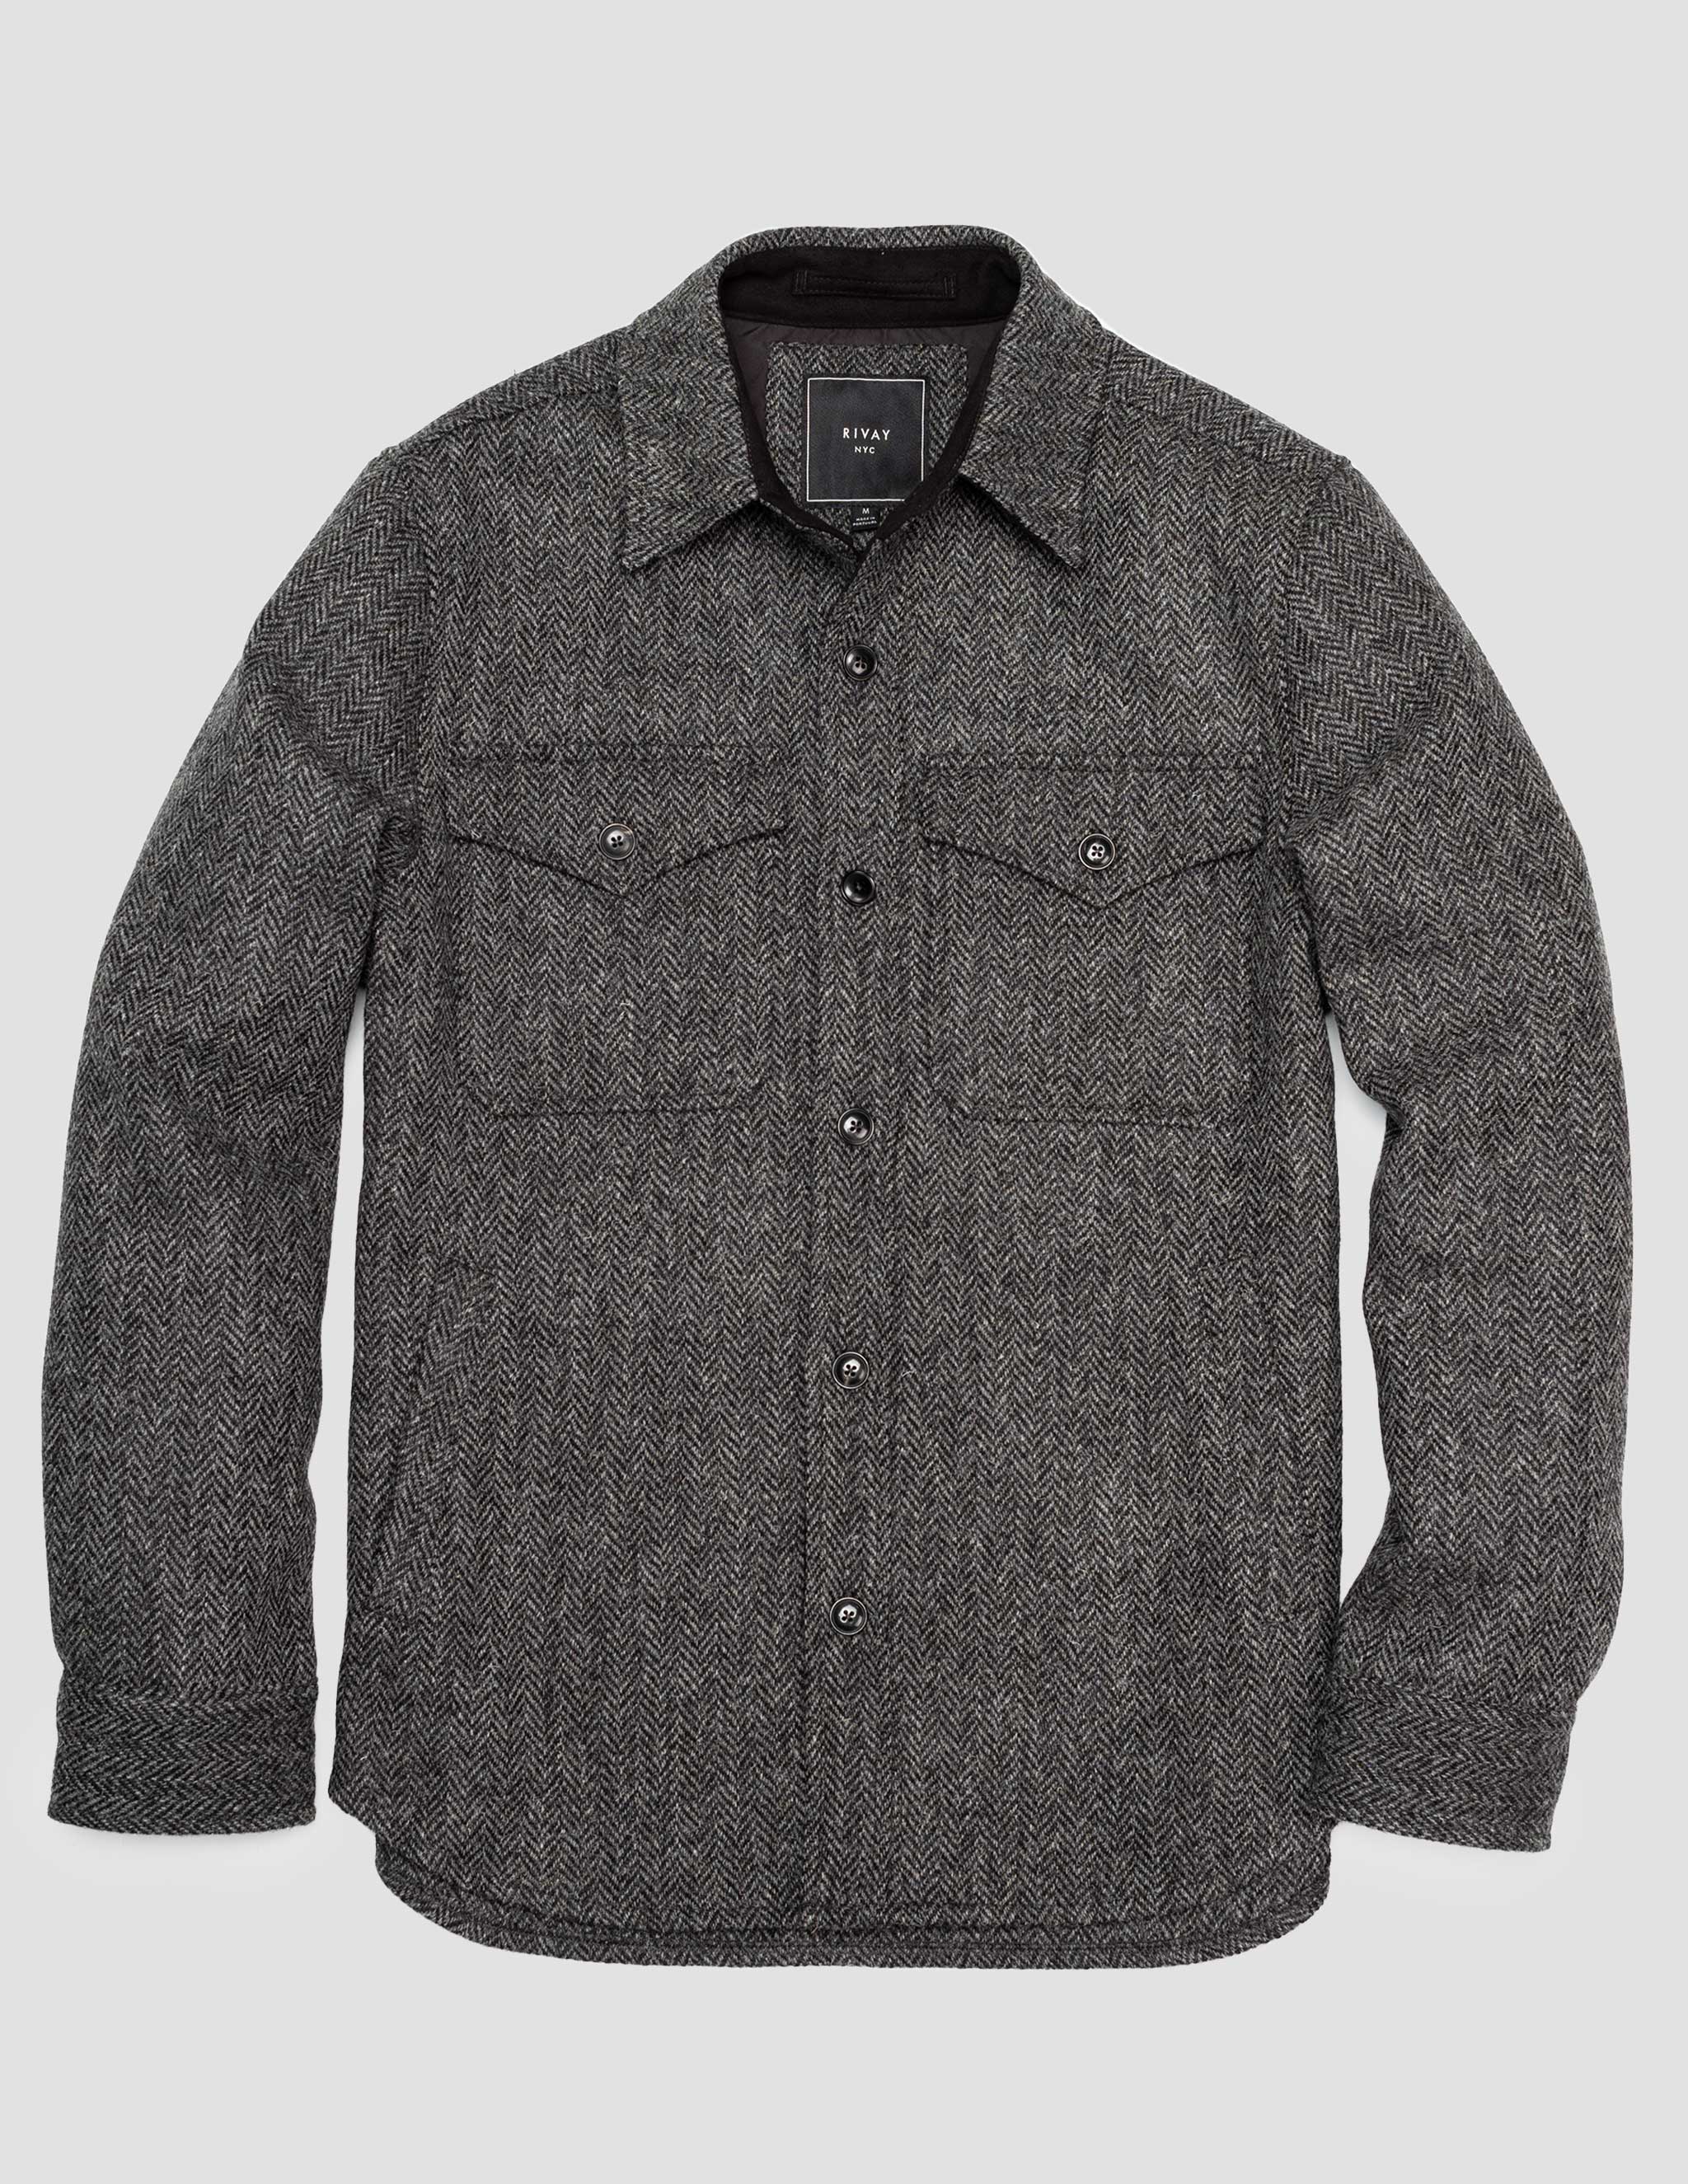 Harris Tweed Wool CPO Shirt Jacket in Charcoal Herringbone – RIVAY